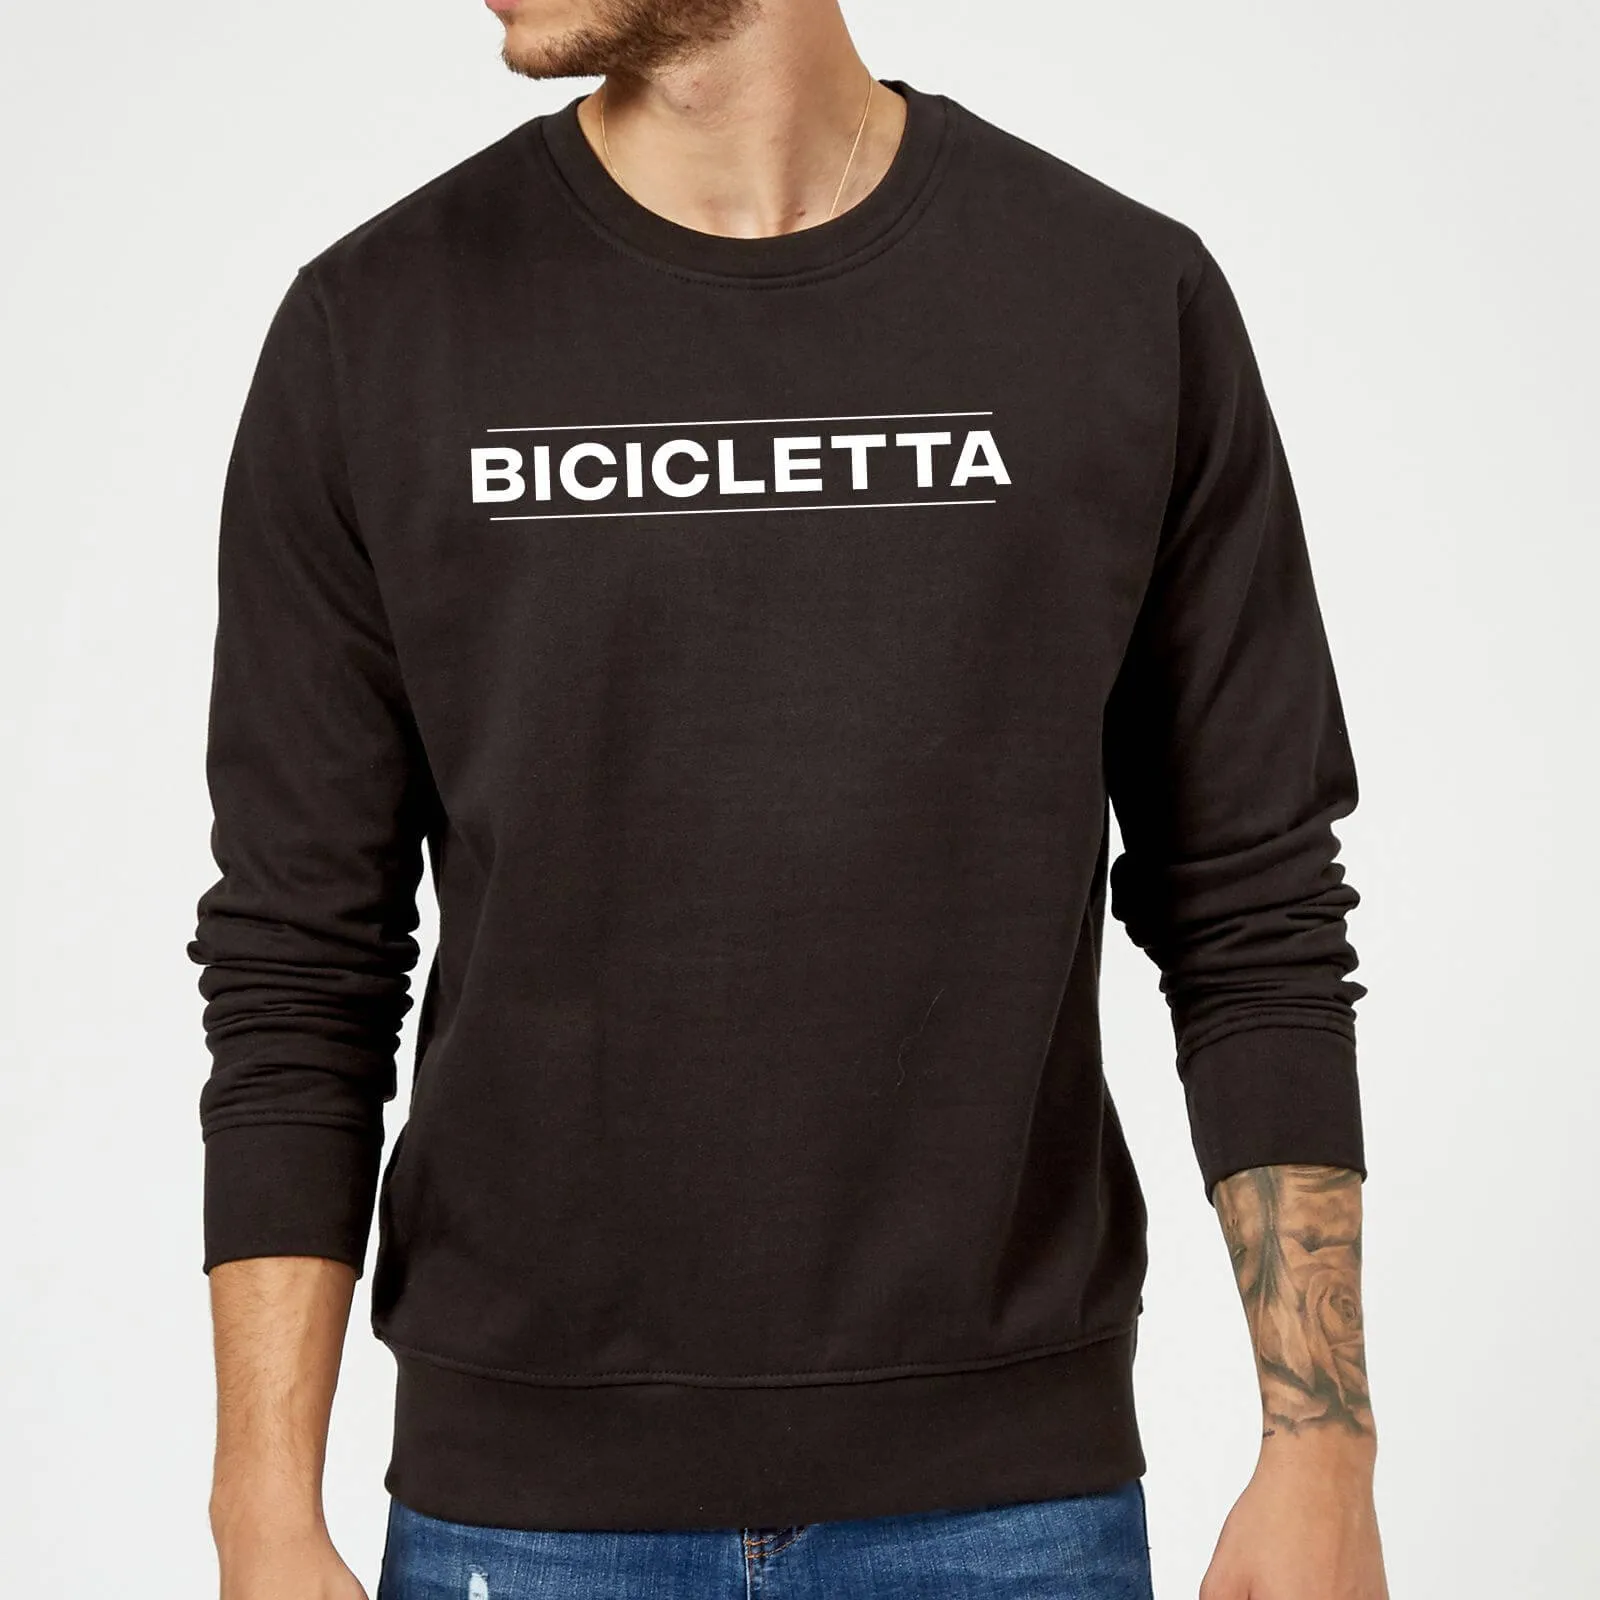 Bicicletta Sweatshirt - S - Bianco